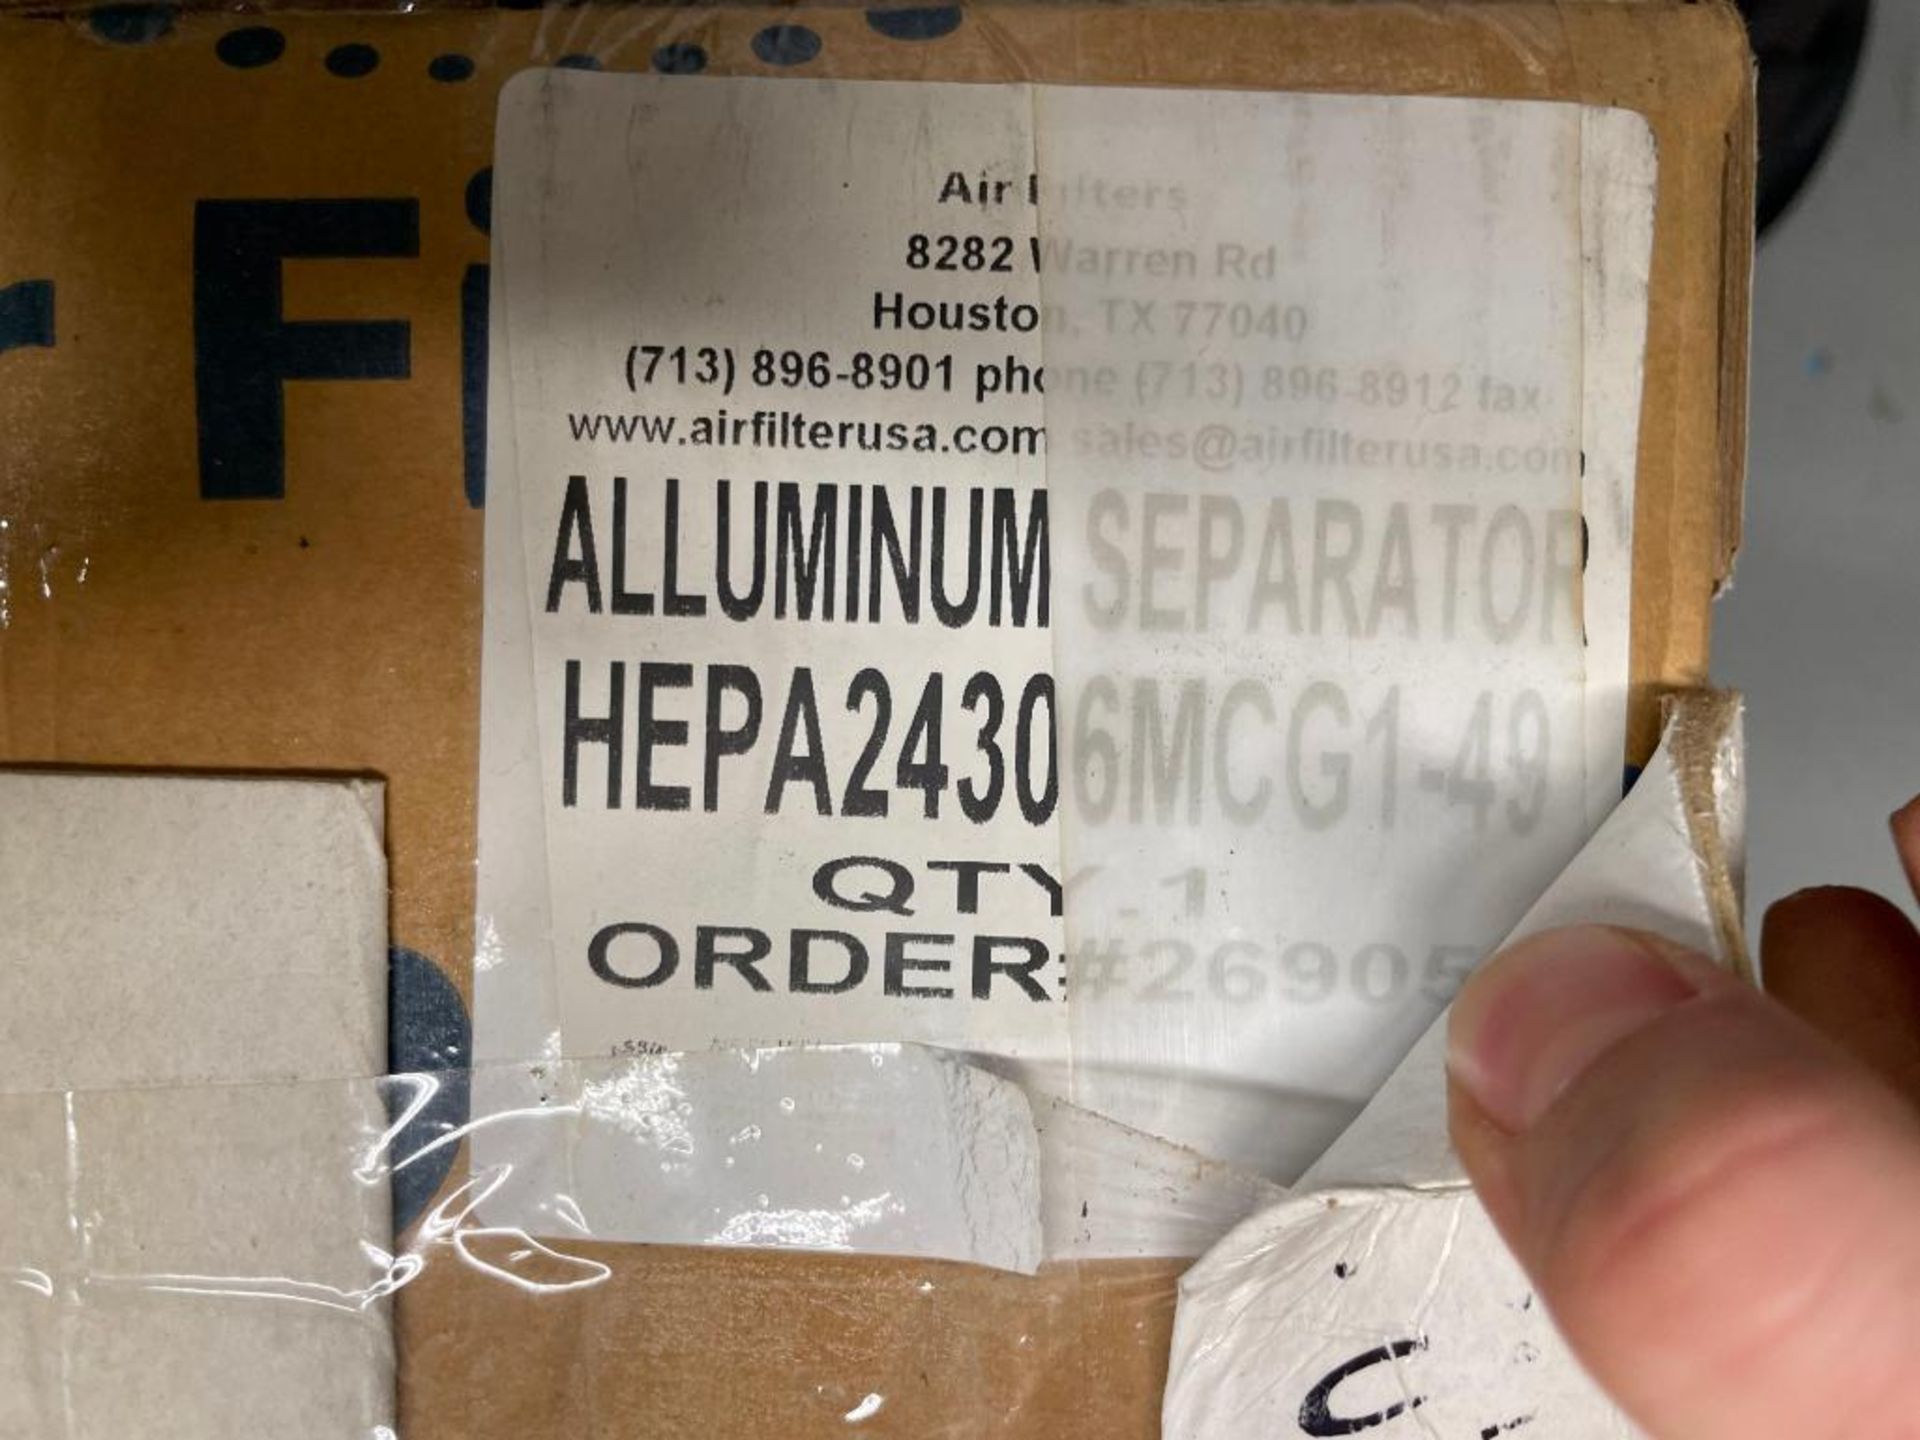 (3) ALUMINUM SEPARATOR HEPA FILTERS FOR EXHAUST HOODS BRAND/MODEL: AIR FILTER USA HEPA24306MCG1-49 S - Image 3 of 3